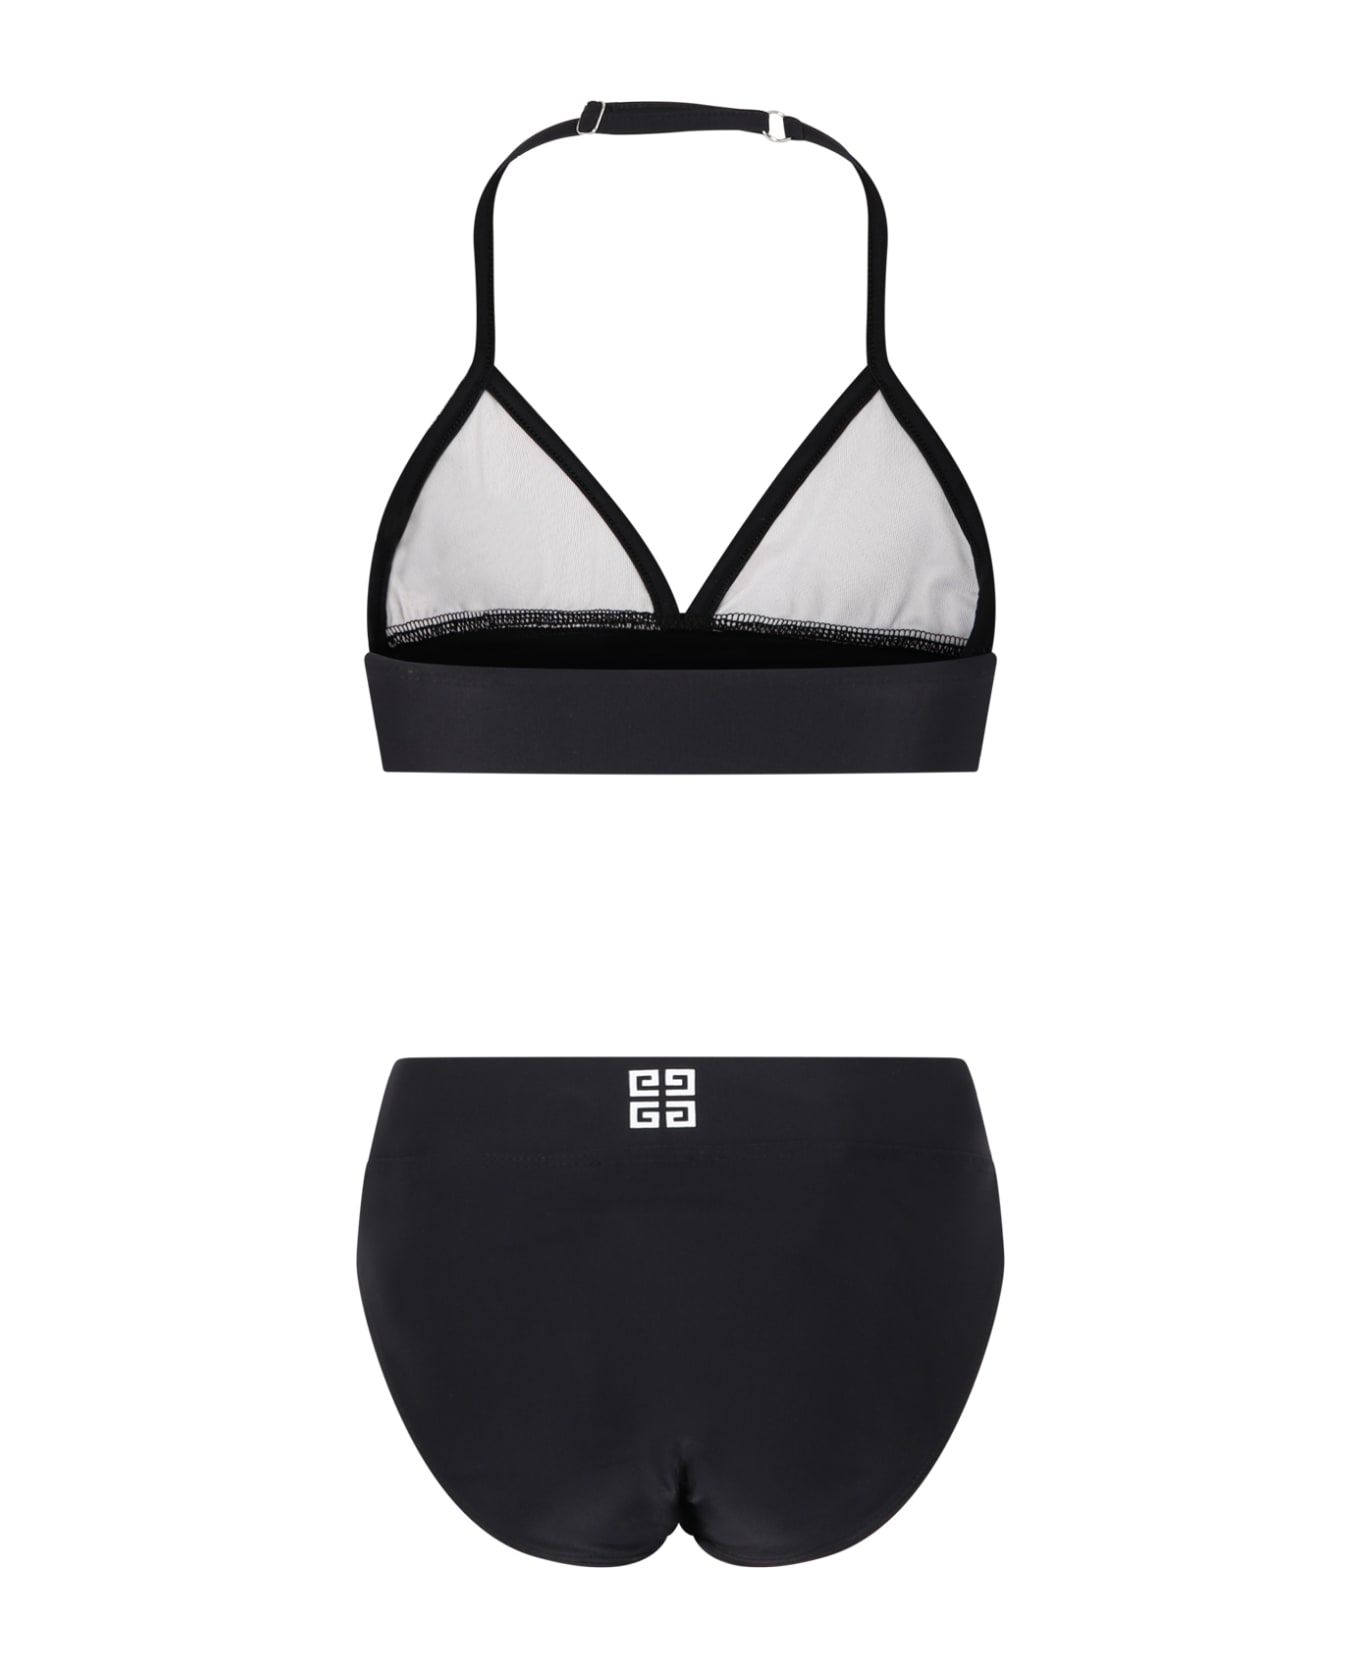 Givenchy Black Bikini For Girl With Logo - Black